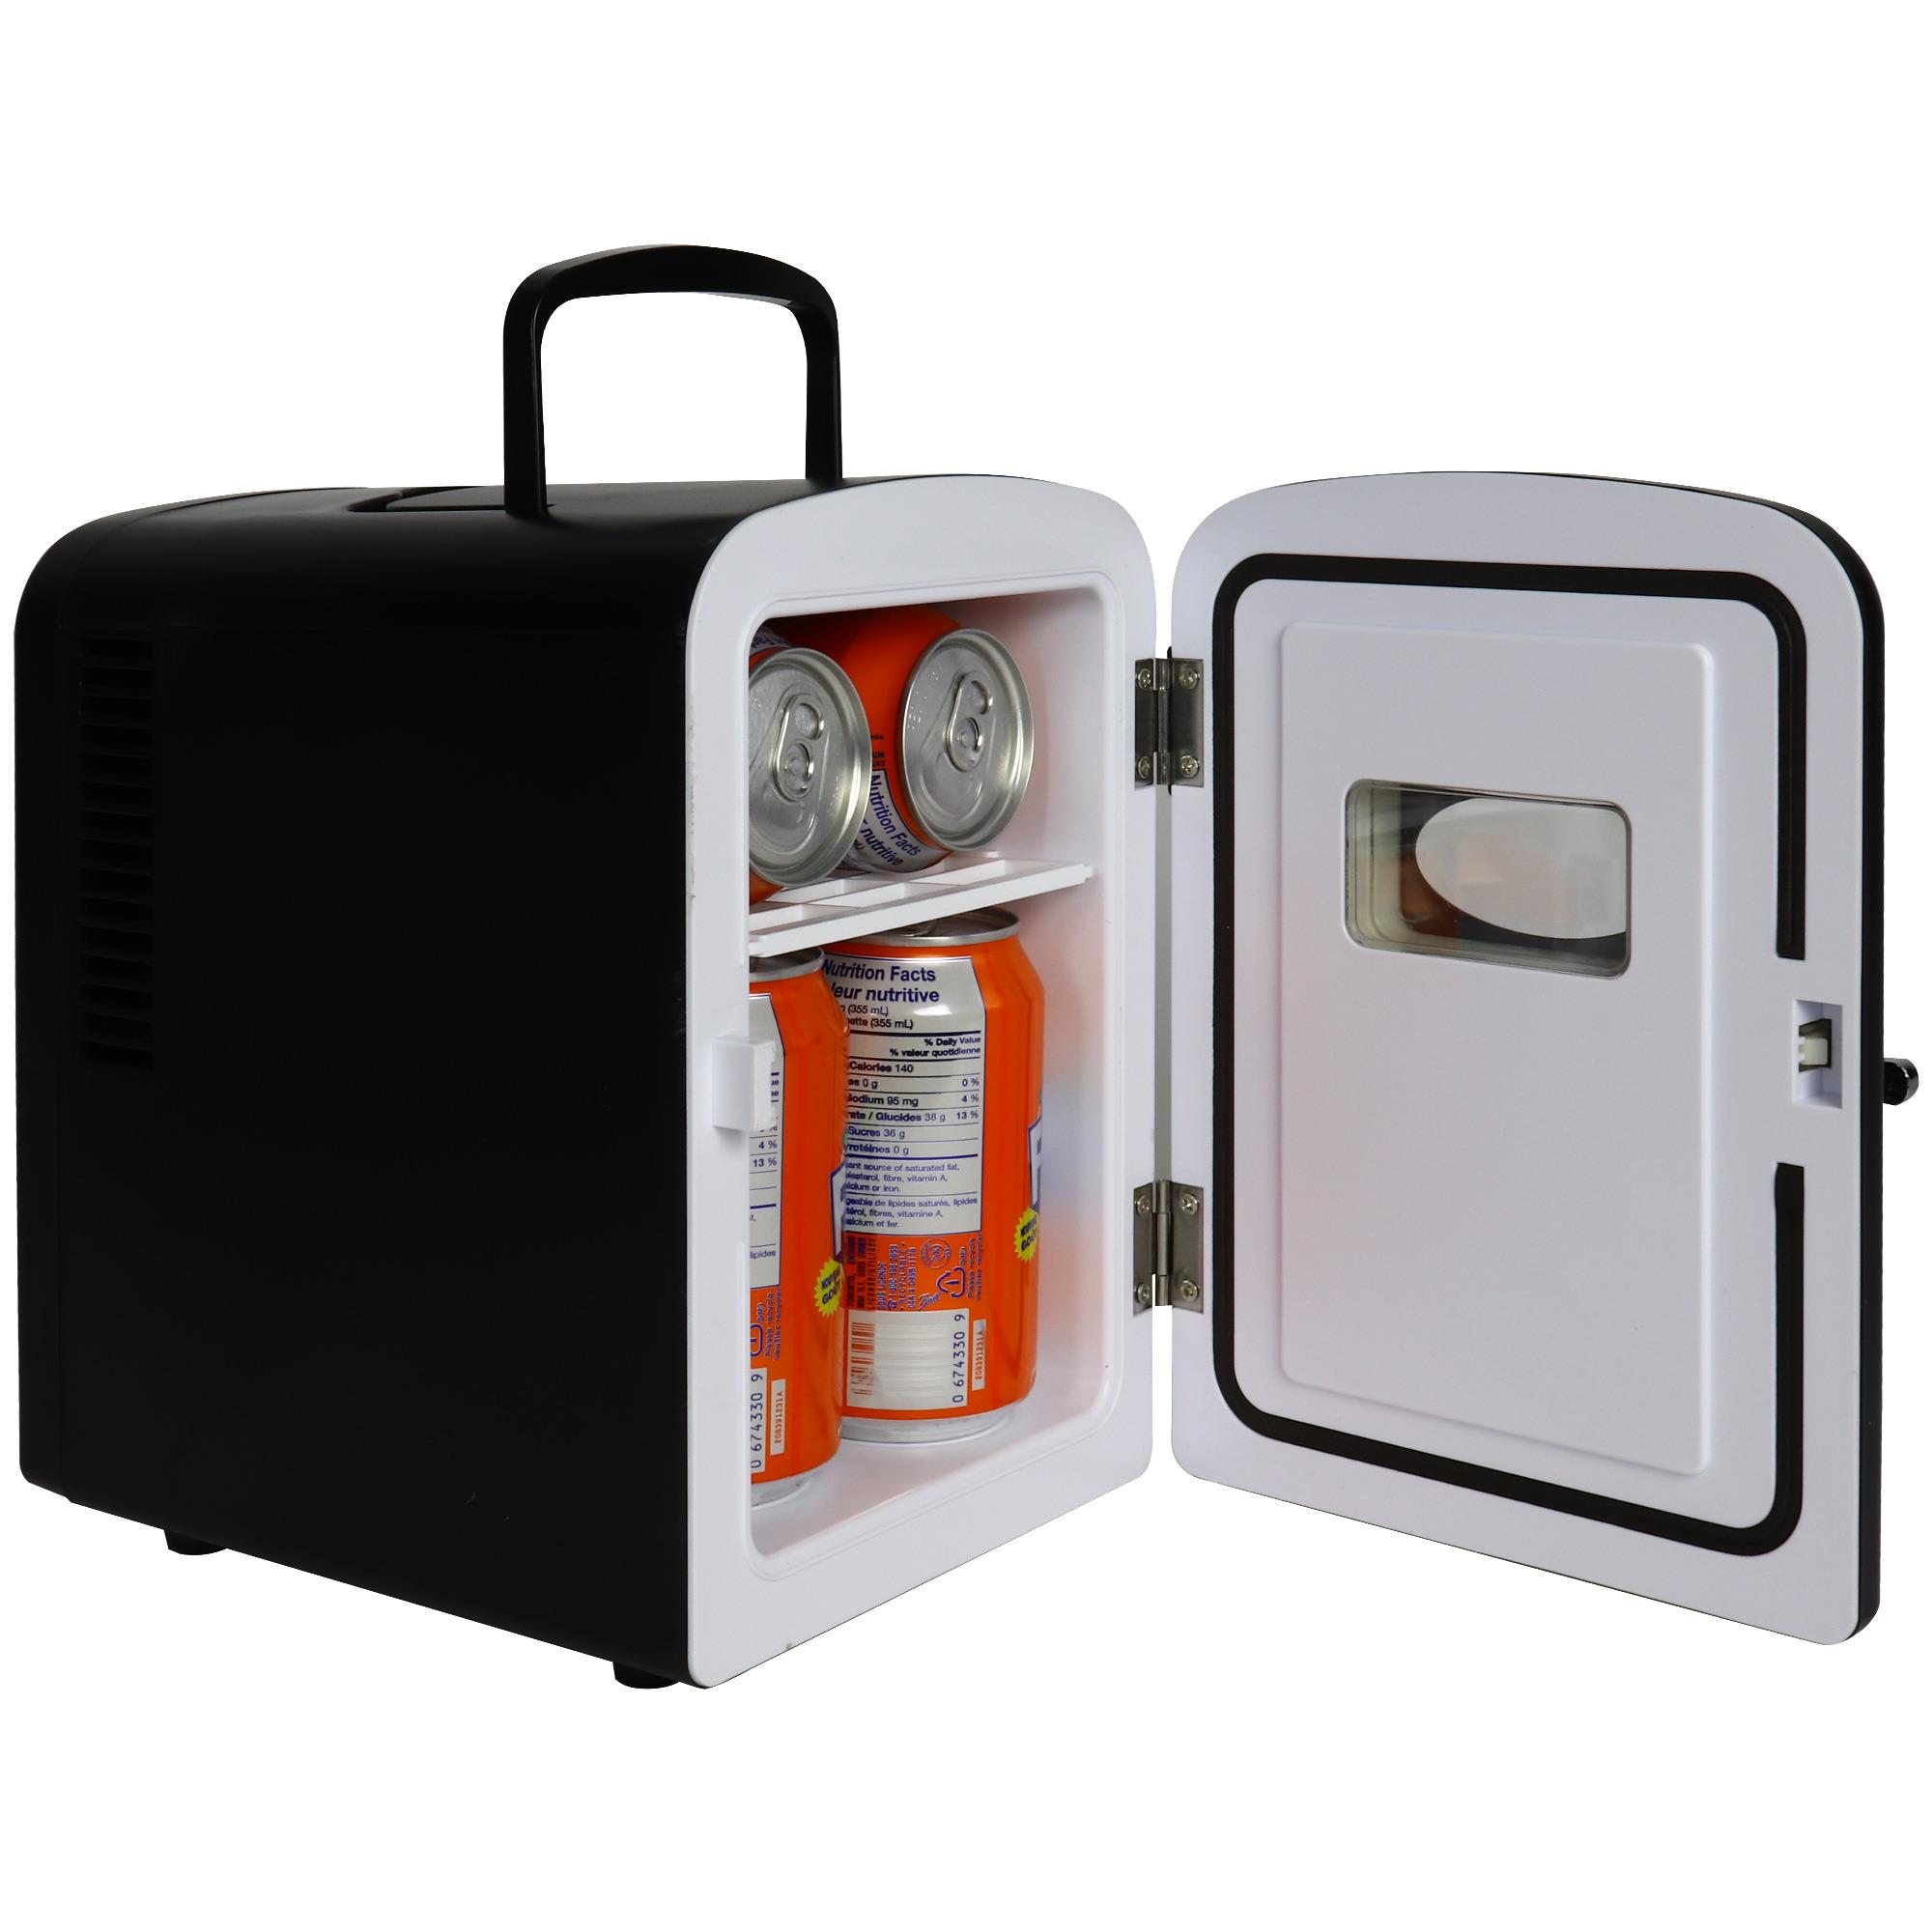 Koolatron retro Mini Portable Fridge, 4L Compact Refrigerator for Skincare,  Beauty Serum, Face Mask, Personal Cooler, Includes 12V and AC Cords